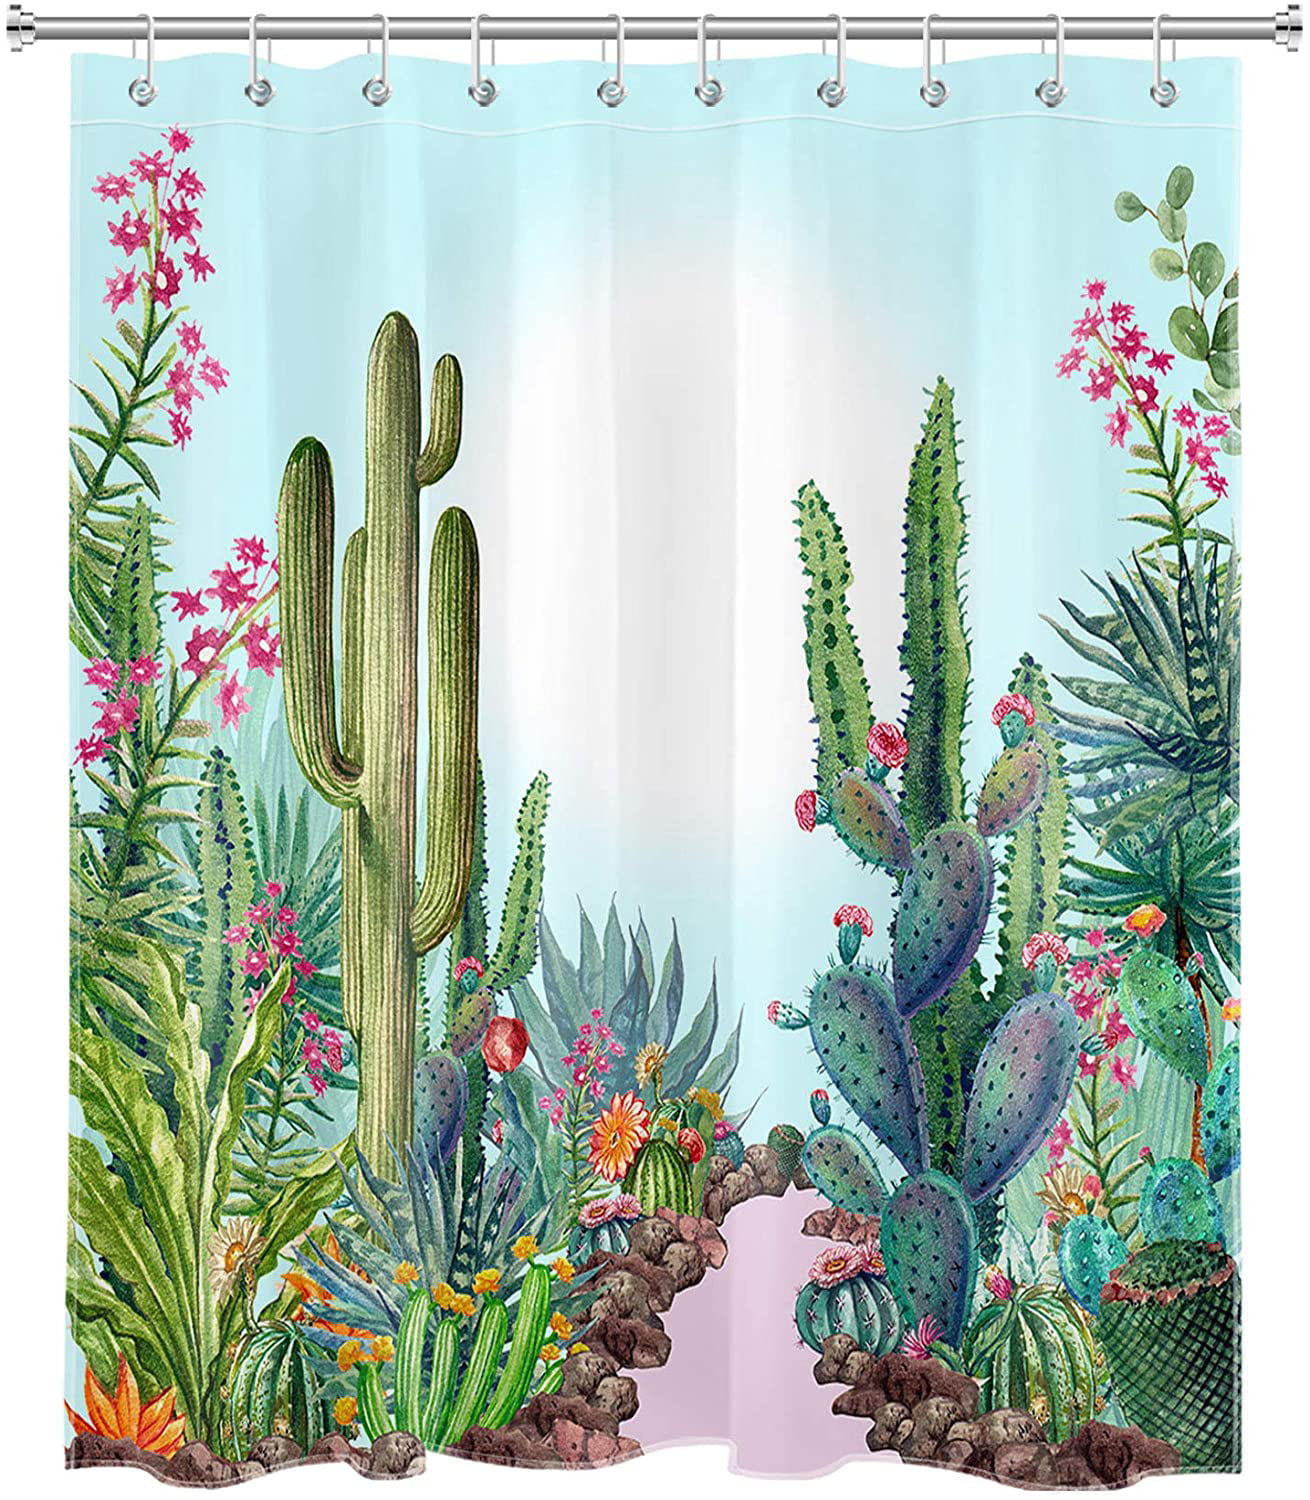 Home Plants Cactus Succulents Shower Curtain Waterproof Fabric Bathroom Mat Set 